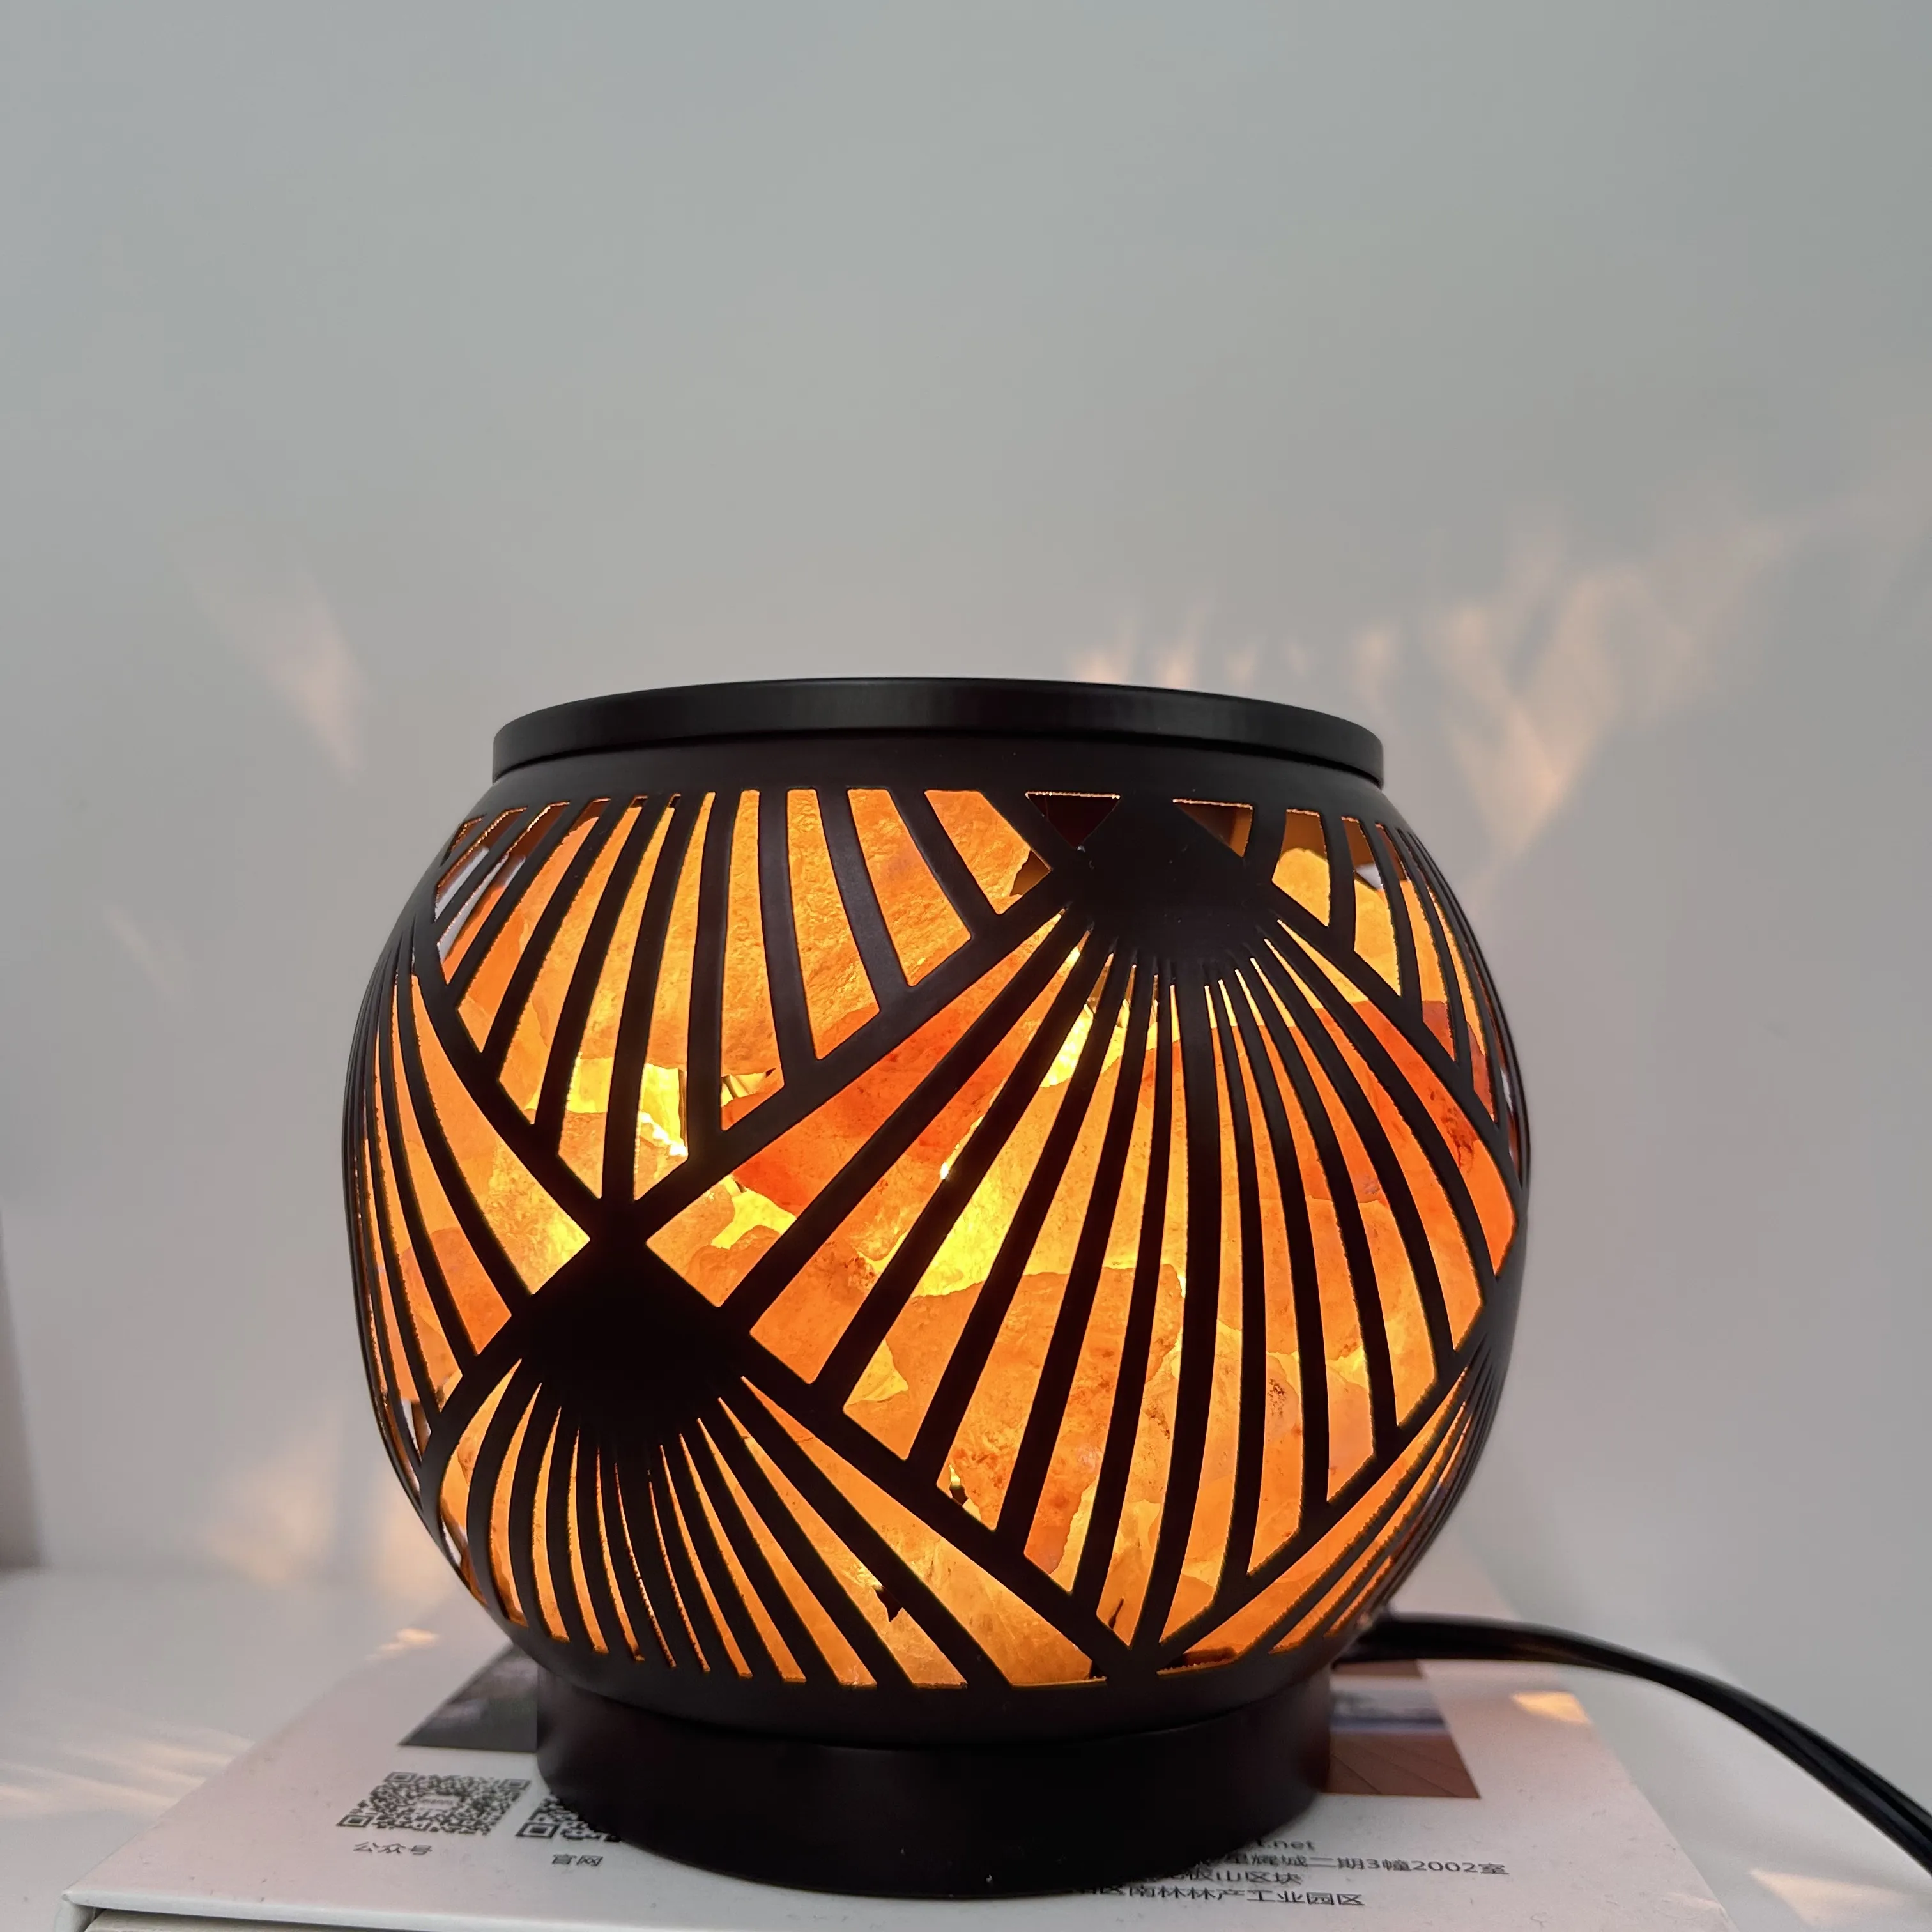 Top quality healing metal wax warmer warm rock salt lamp new design dream catcher himalayan salt lamp